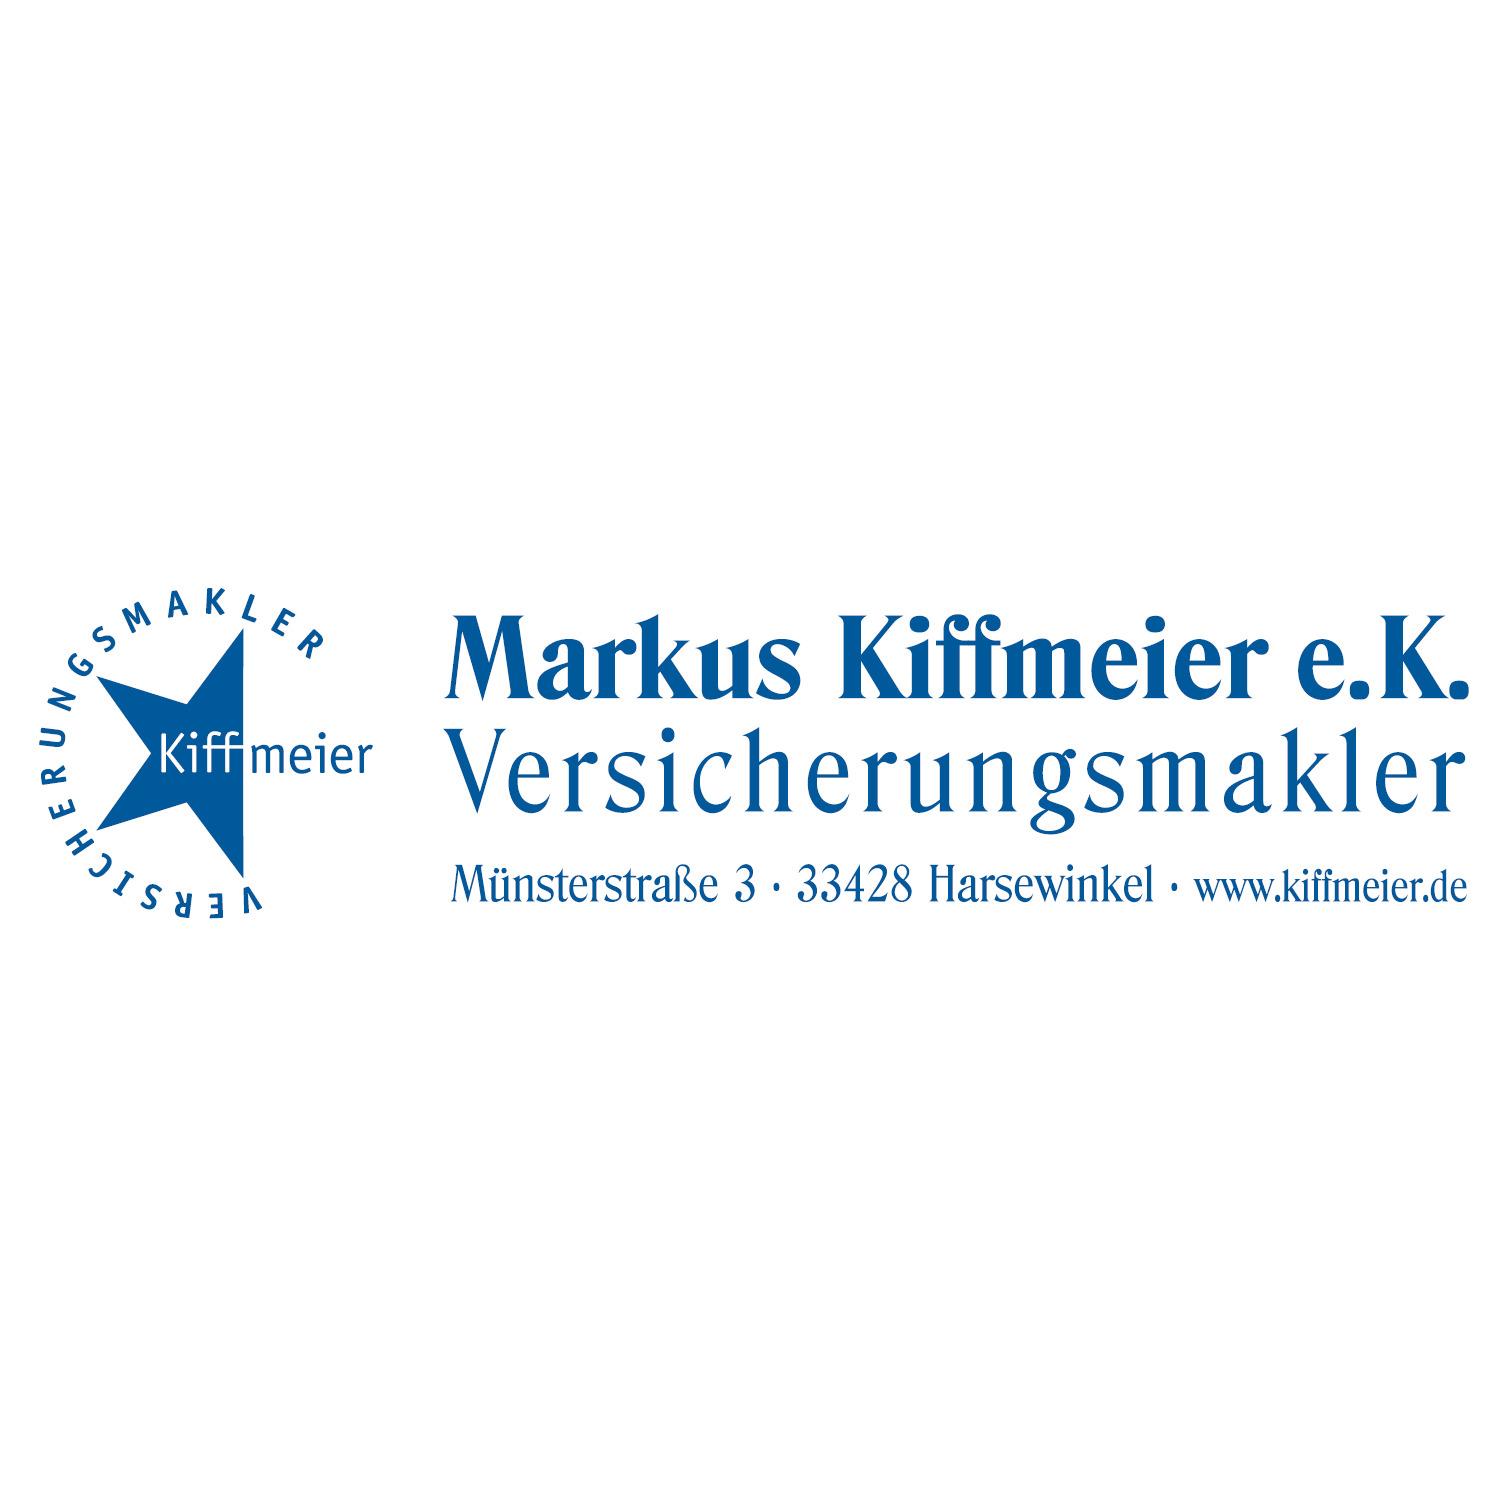 Versicherungsmakler Markus Kiffmeier e.K. in Harsewinkel - Logo